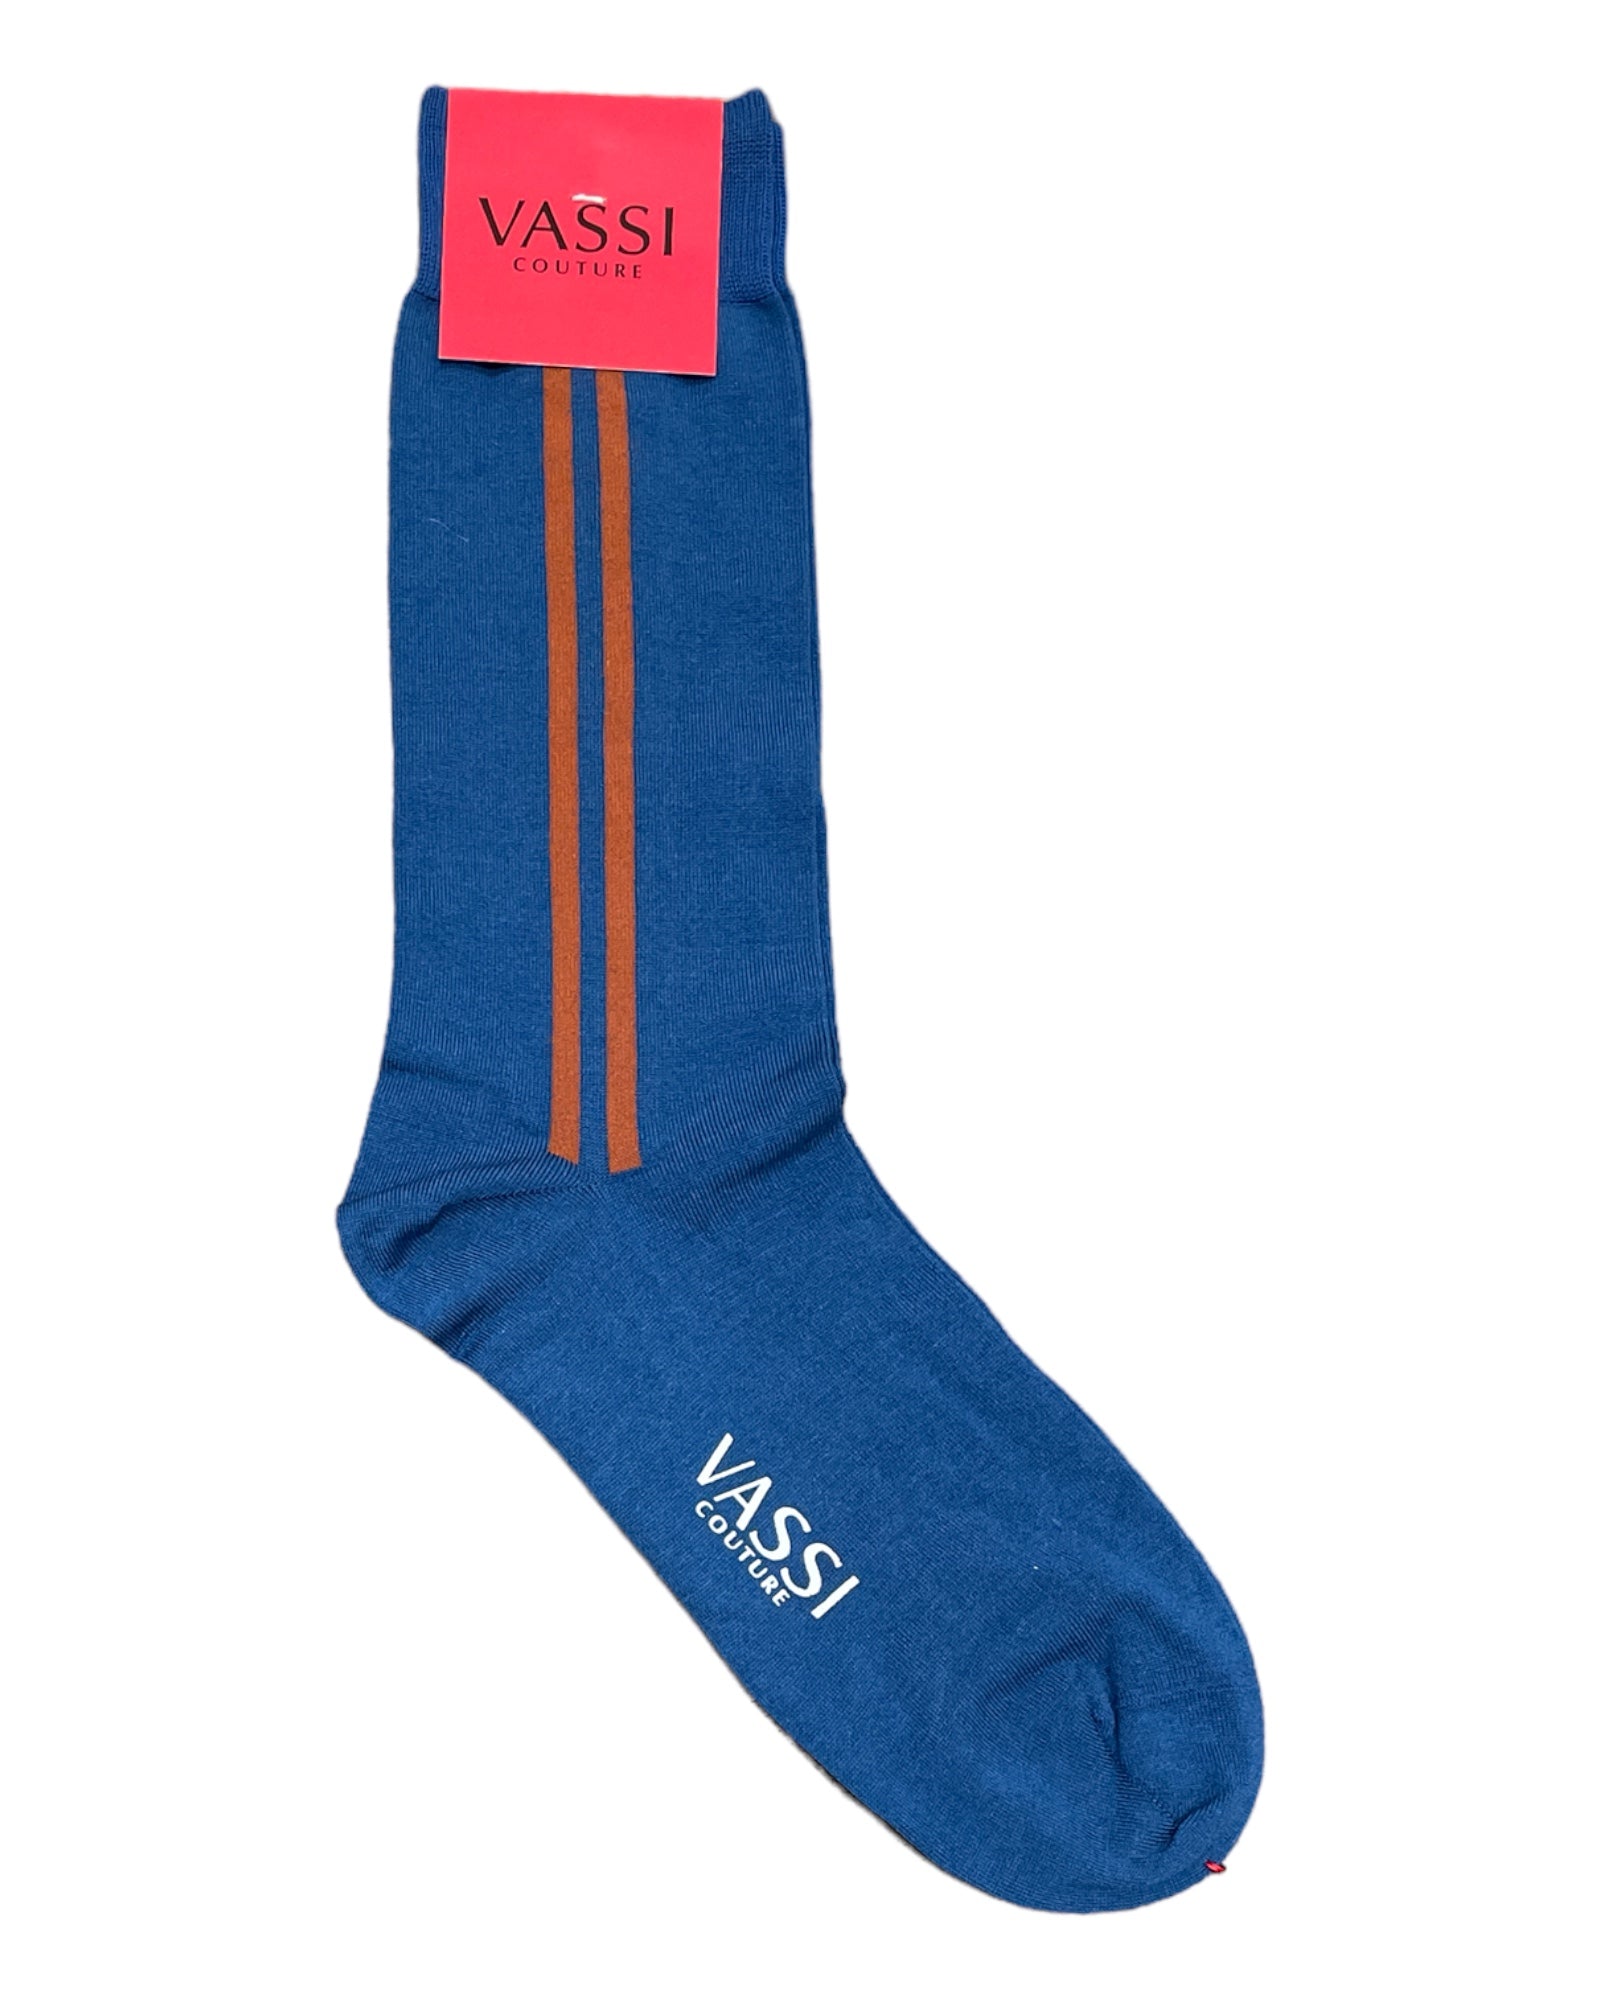 Double Striped Comfort-Socks - Blue-Rust Socks